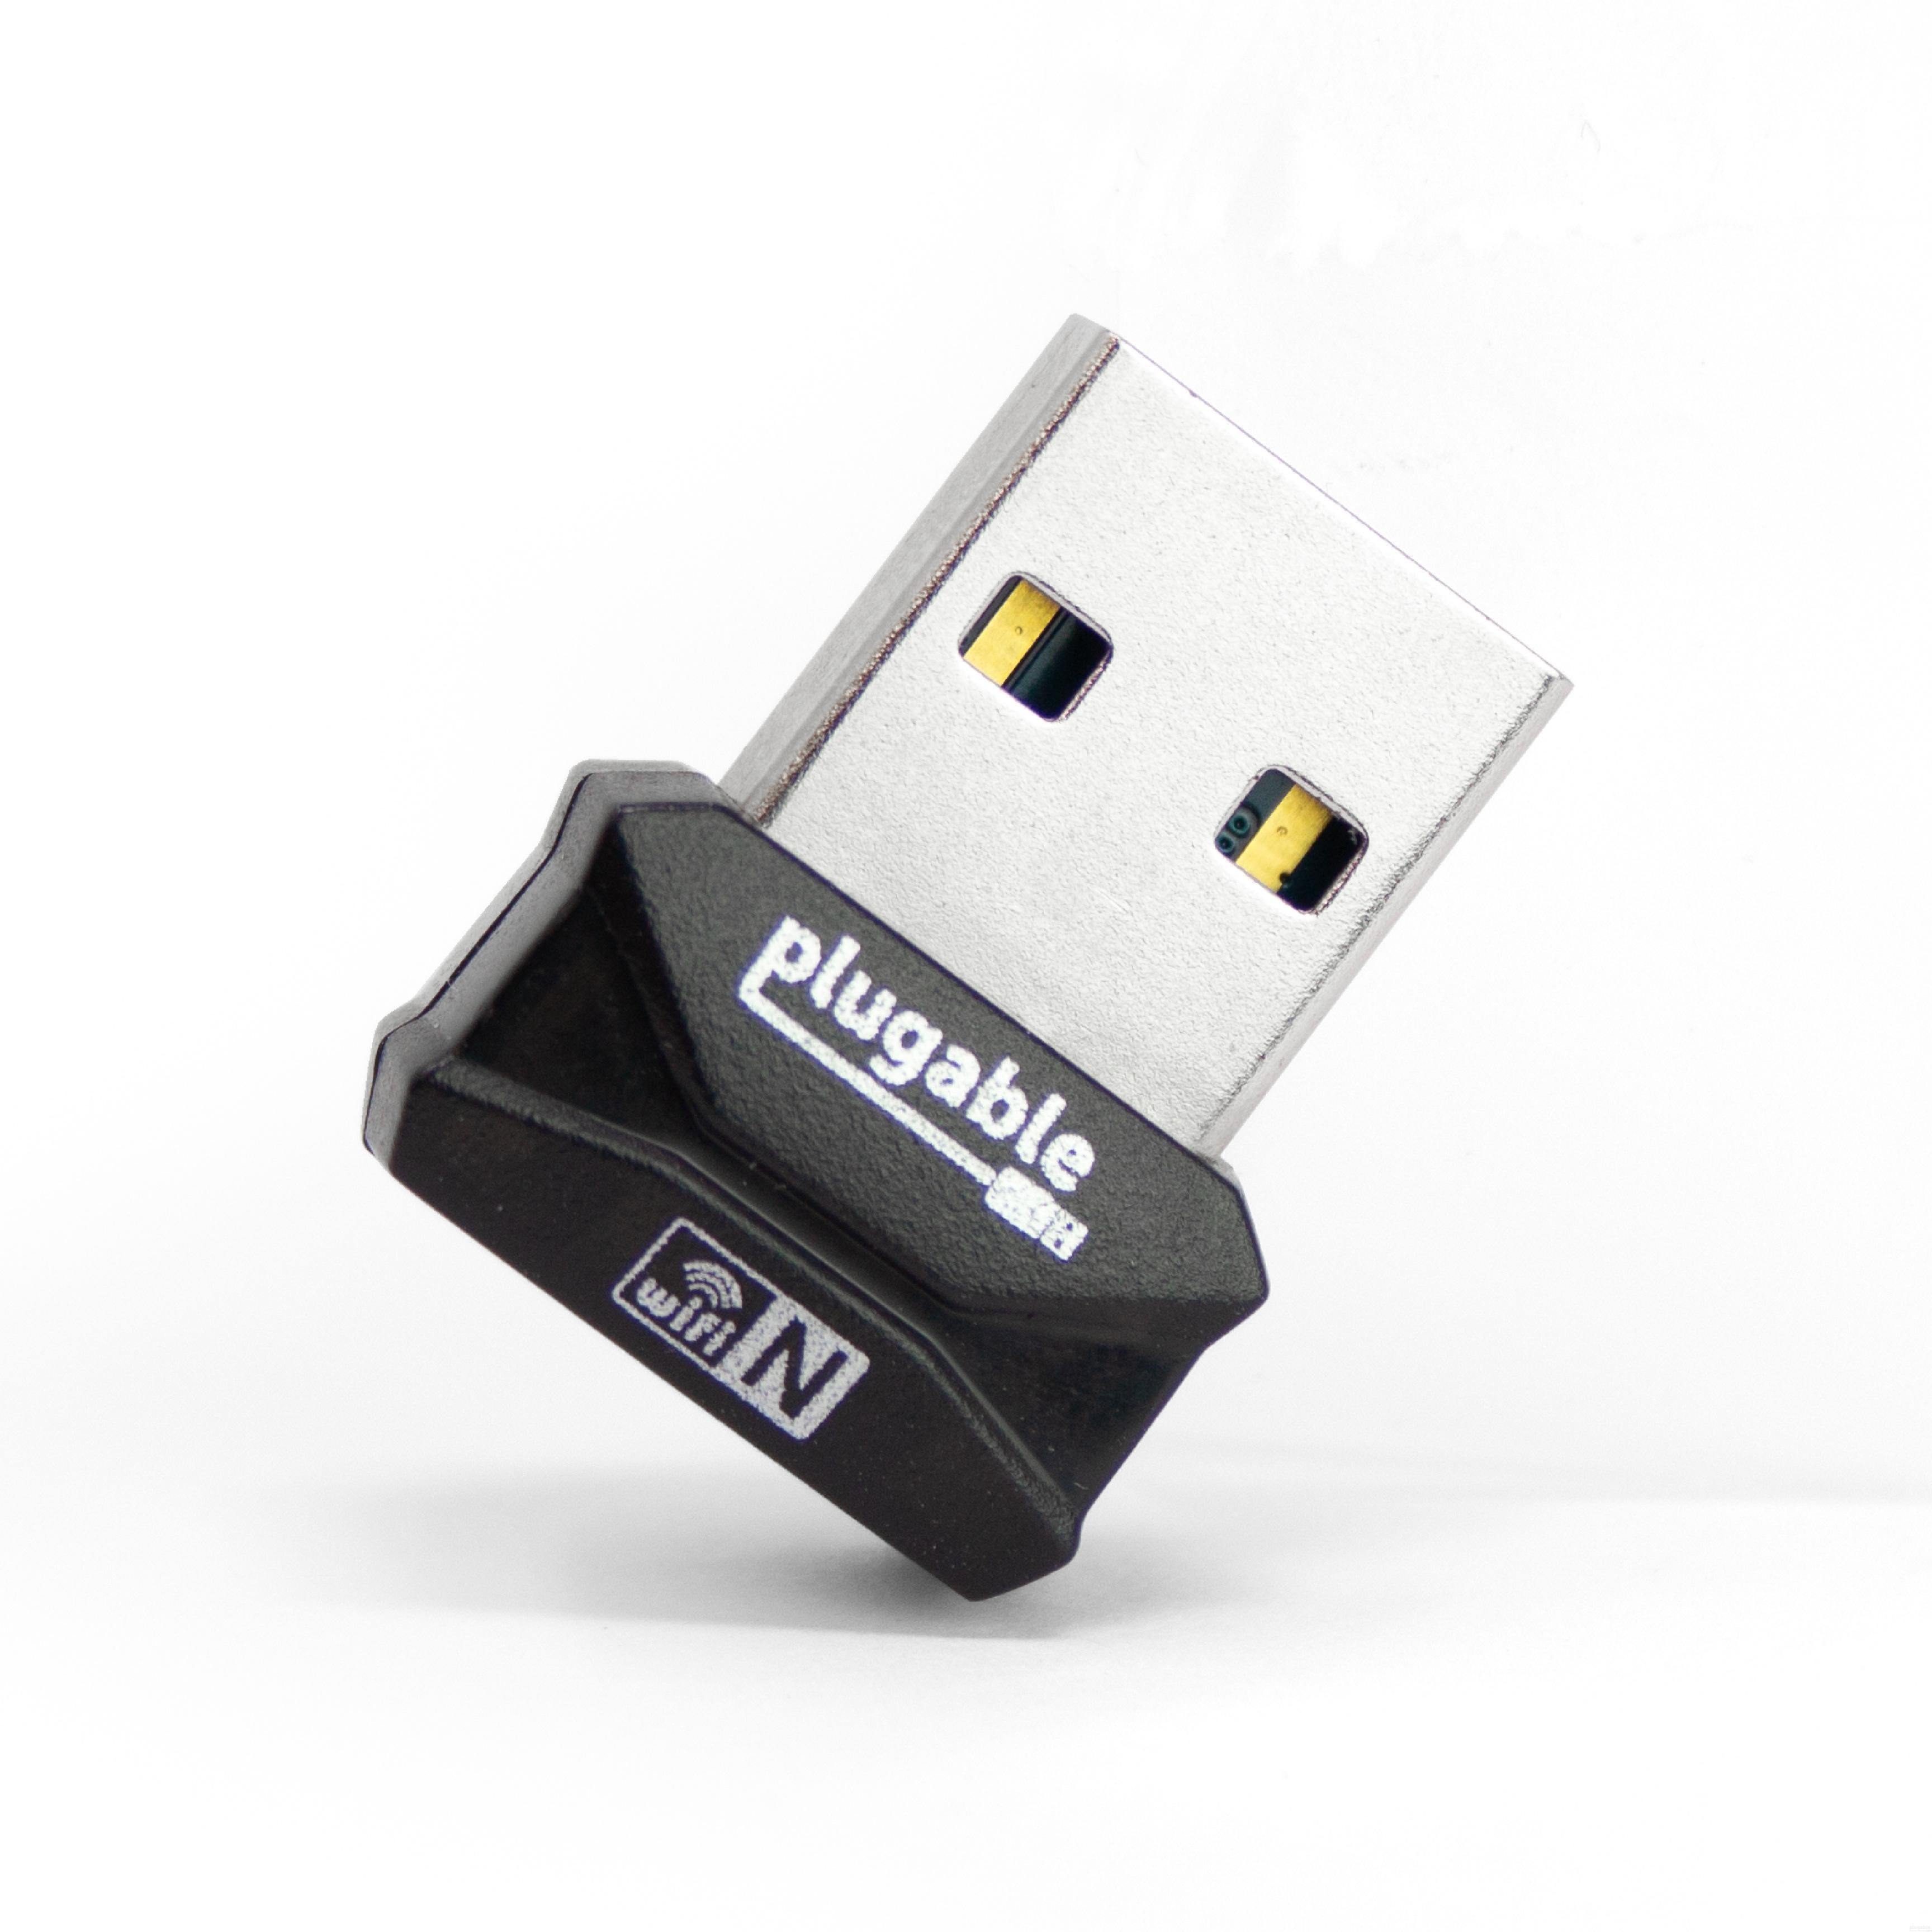 Plugable USB 2.0 802.11n Wireless Adapter